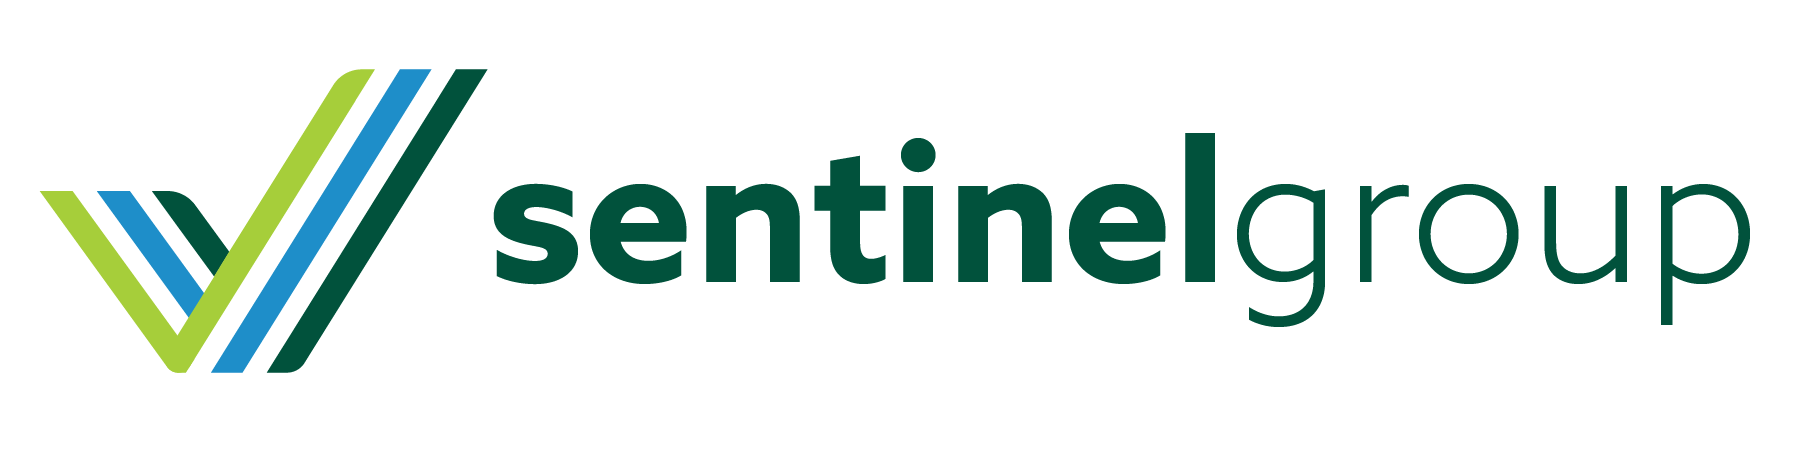 Sentinel Group Logo